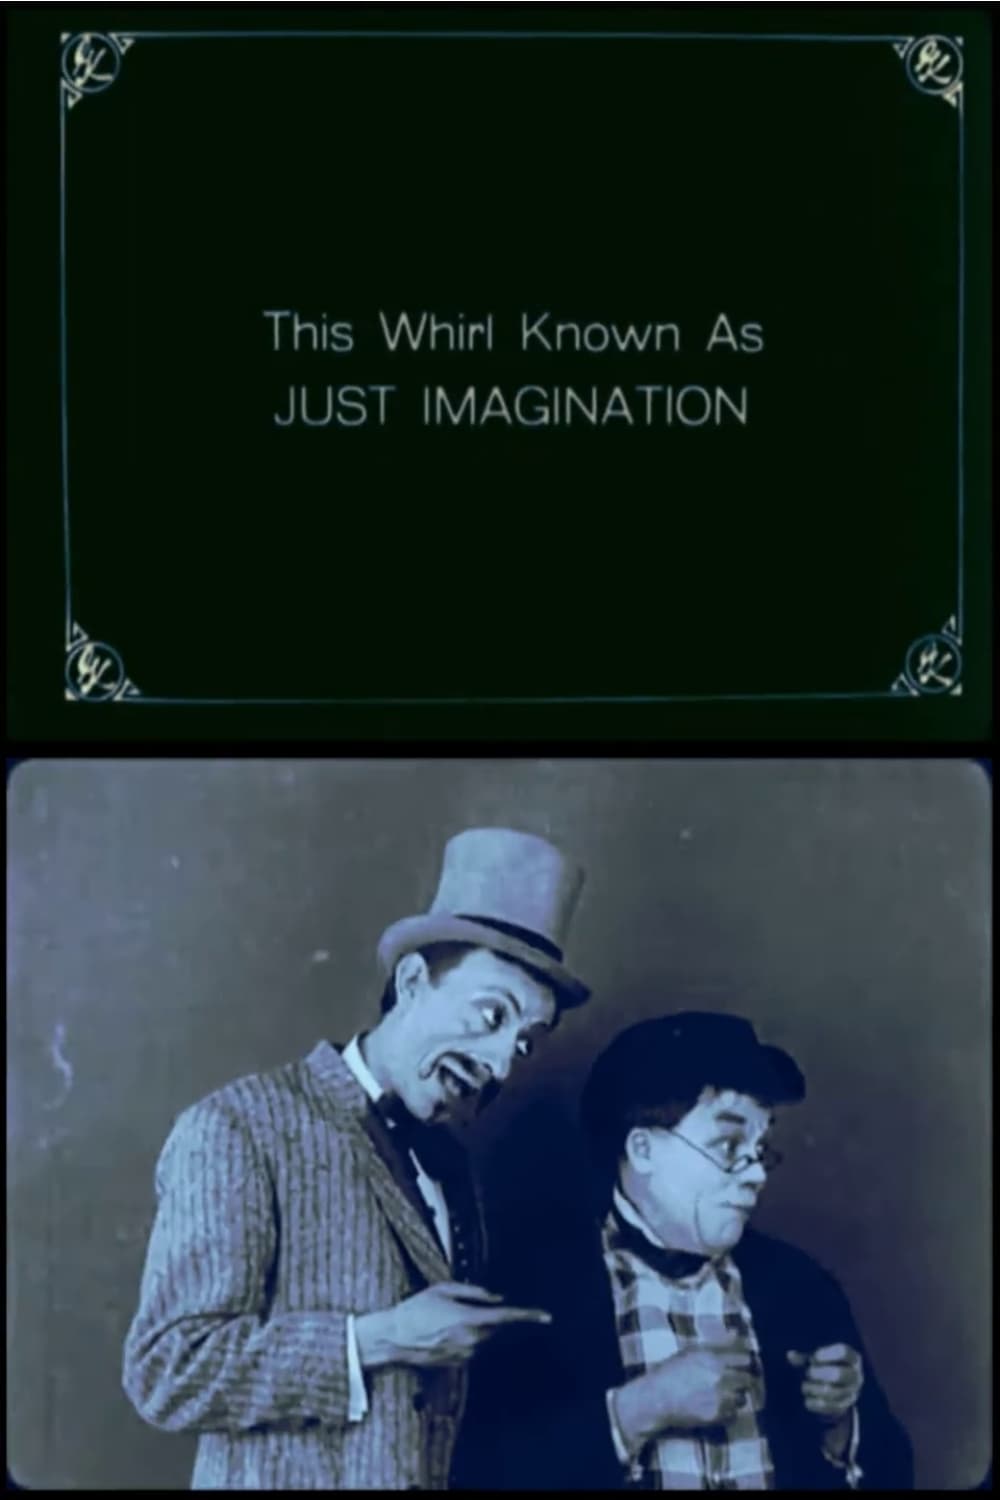 Just Imagination